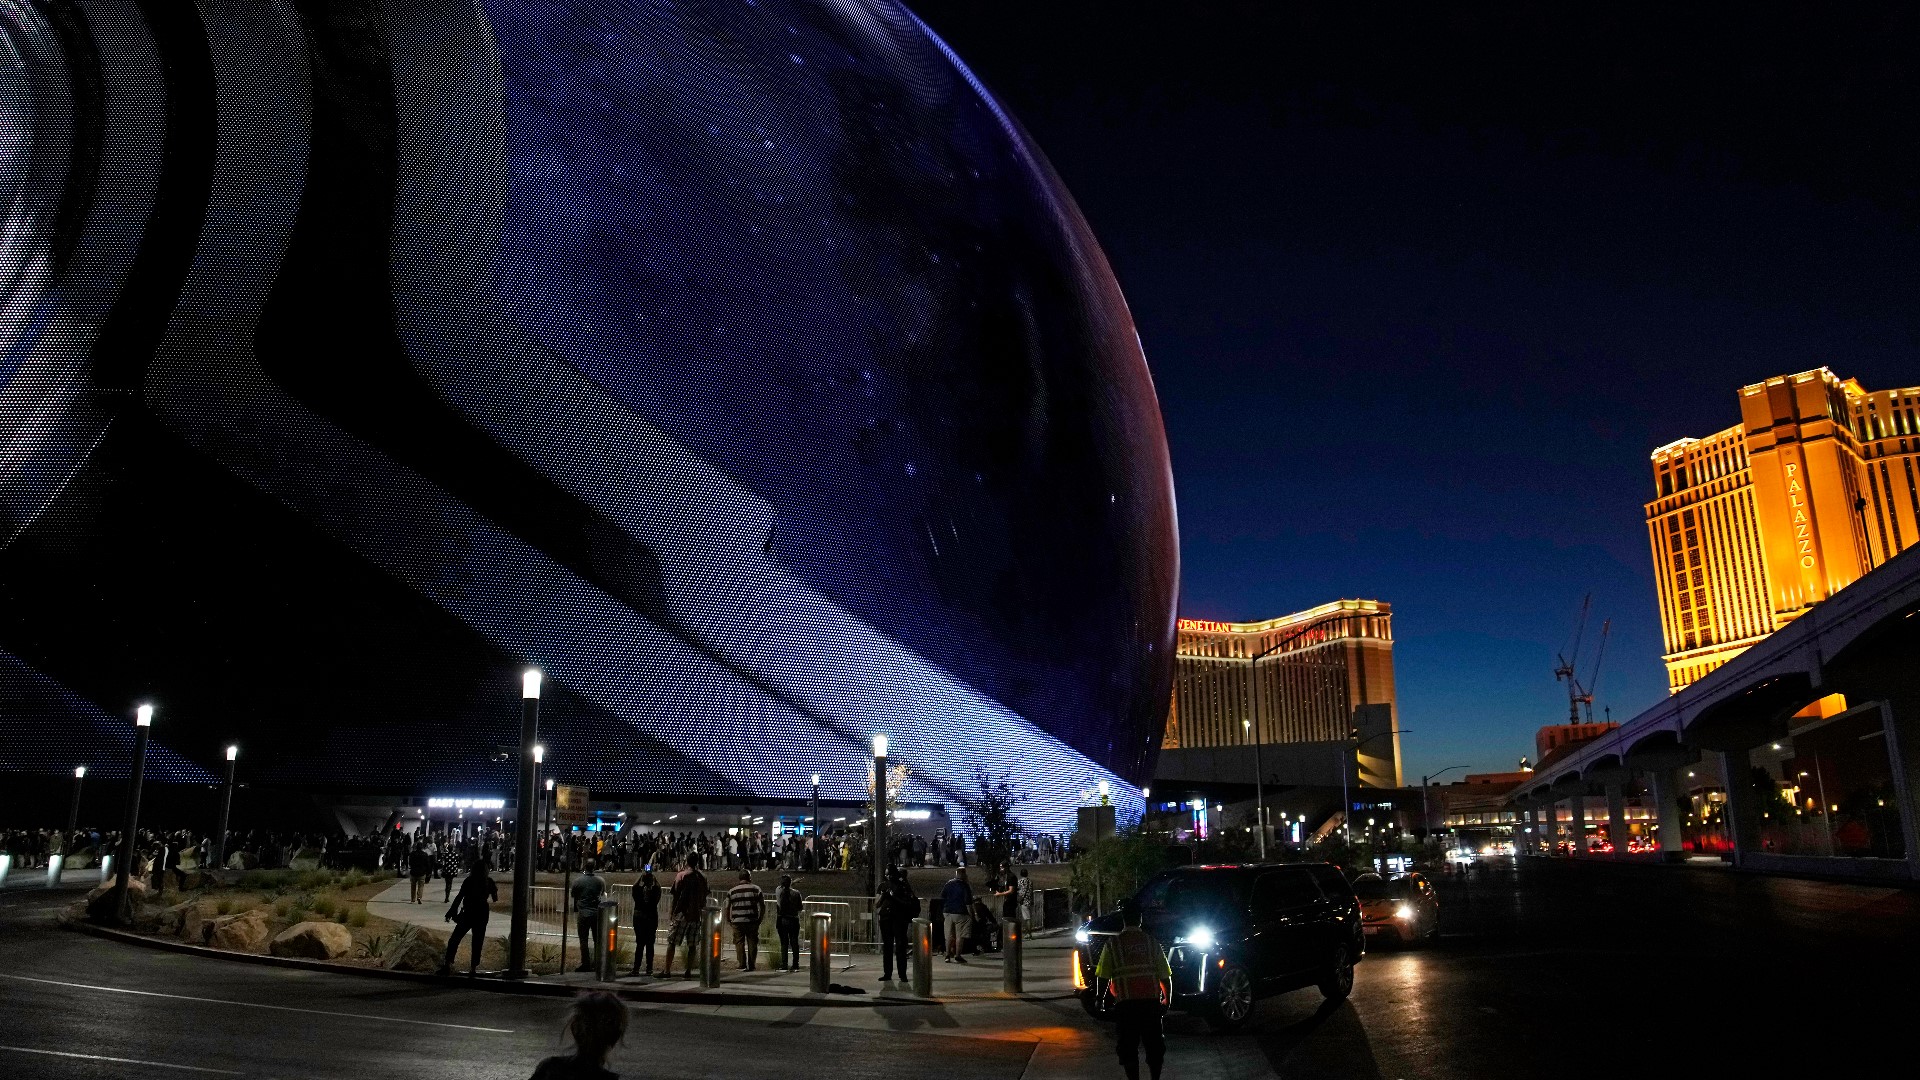 A look inside the Las Vegas Sphere